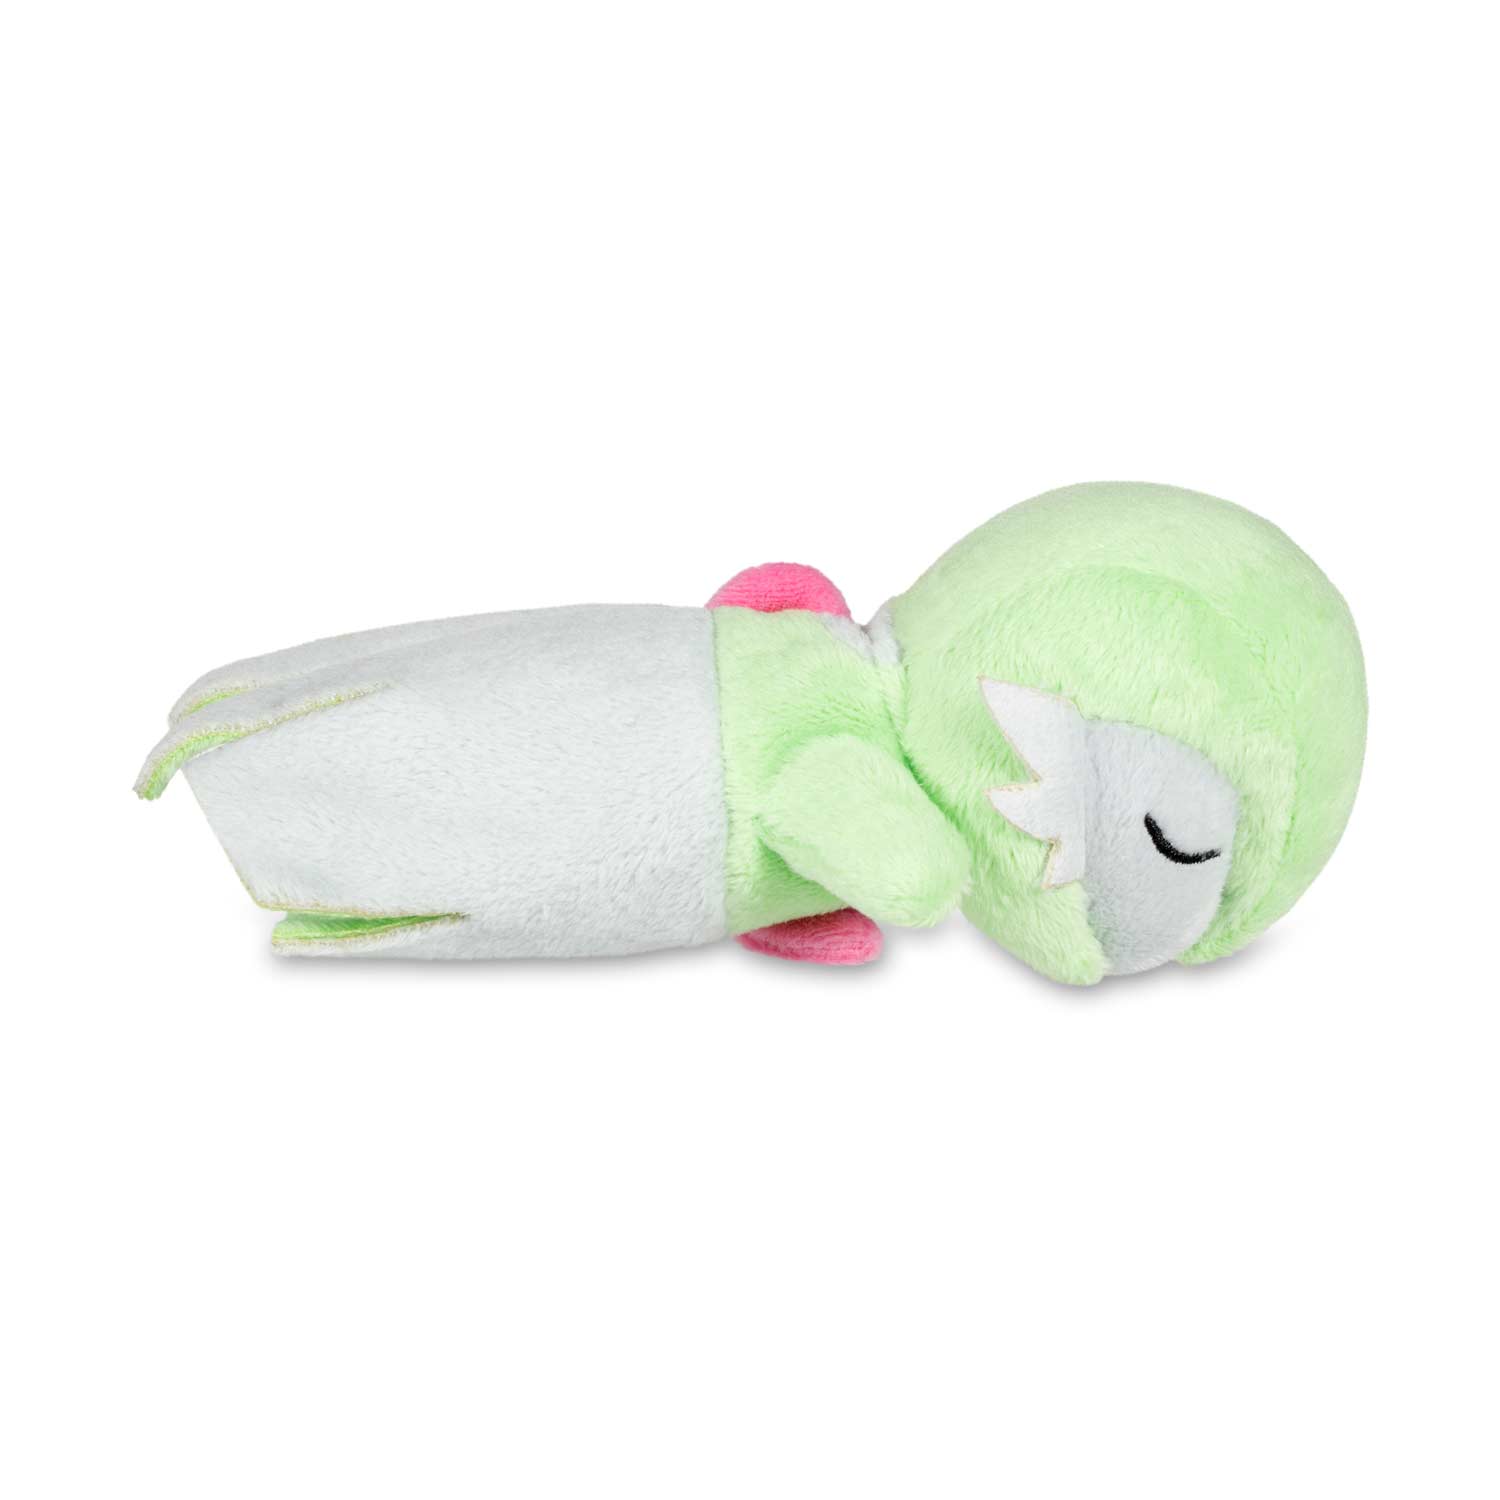 Sleeping Gardevoir Poké Plush Kuttari Cutie Plush Toy Pokémon Center Original